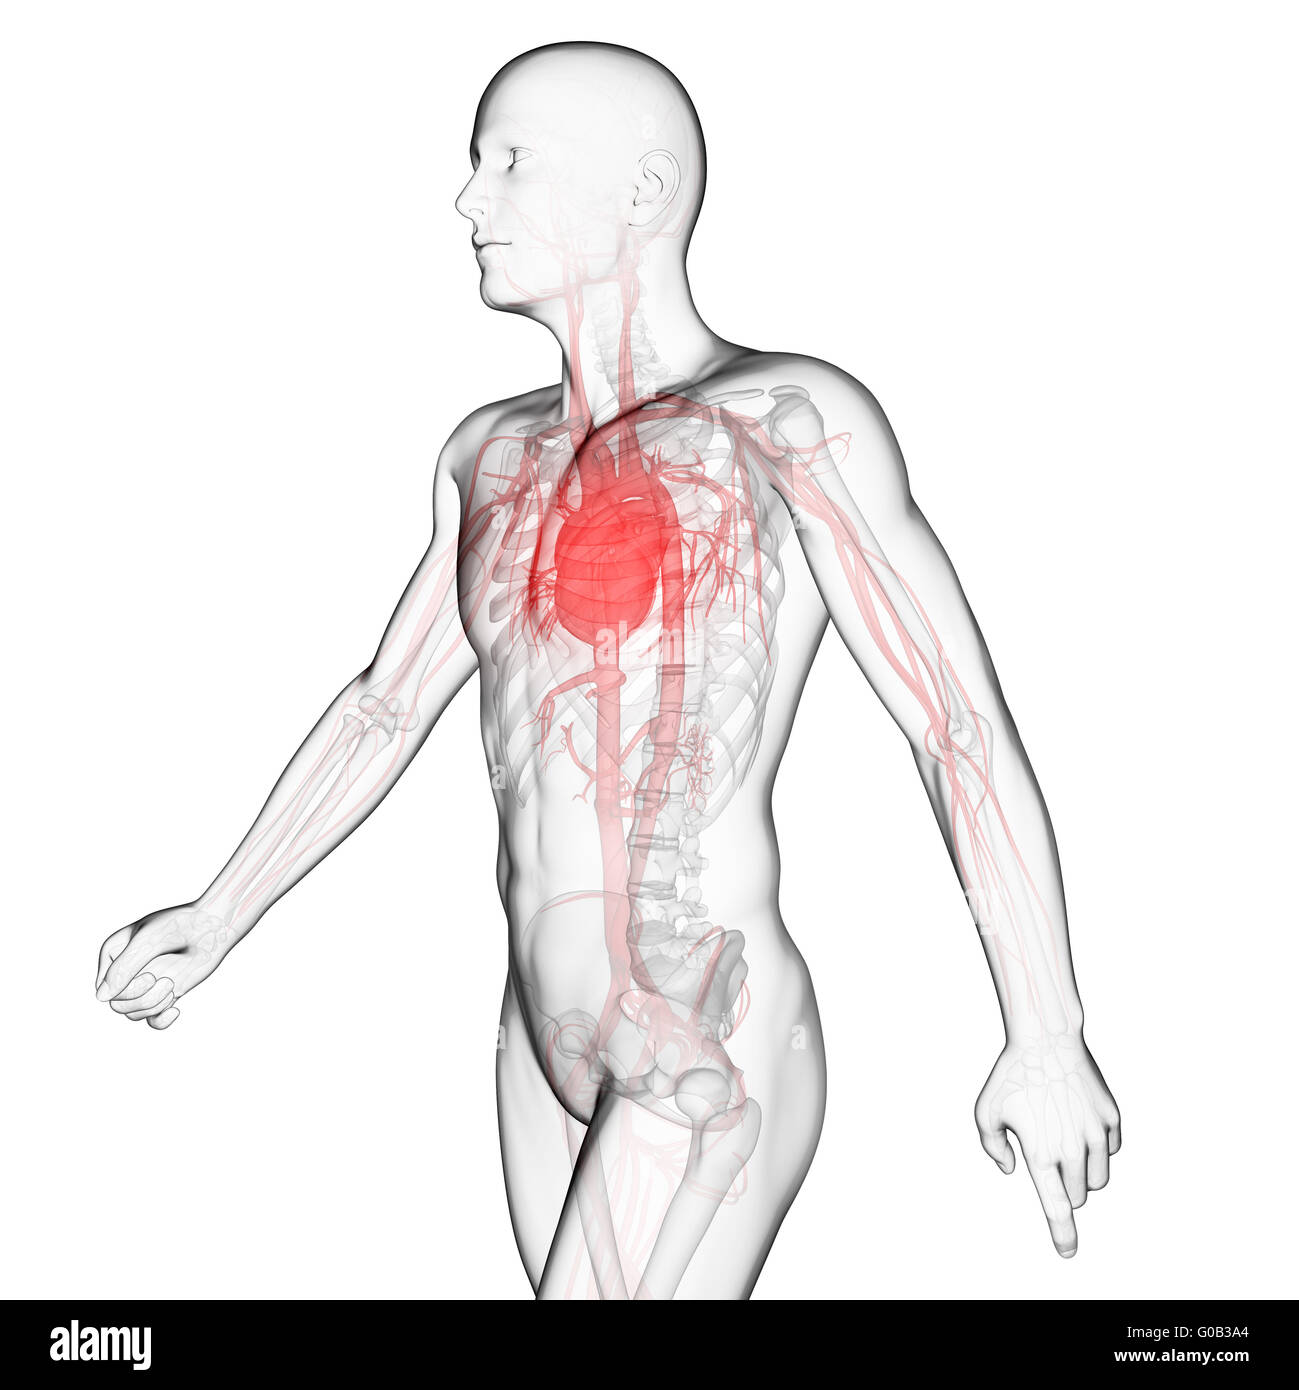 3d rendered illustration of the vascular system Stock Photo